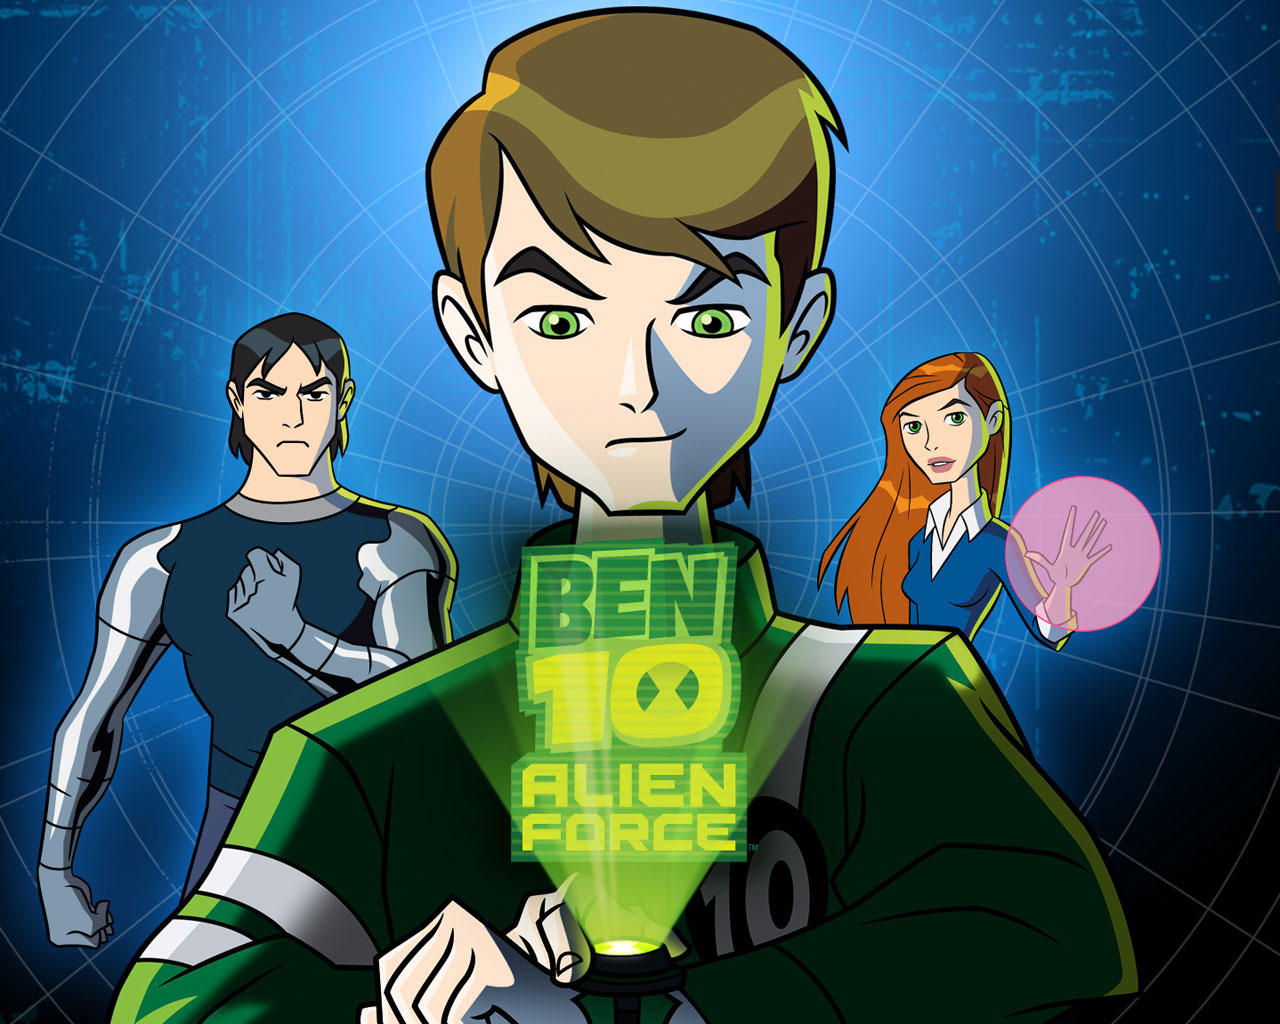 Ben 10 Alien Force Anime Style by CLDavi on DeviantArt